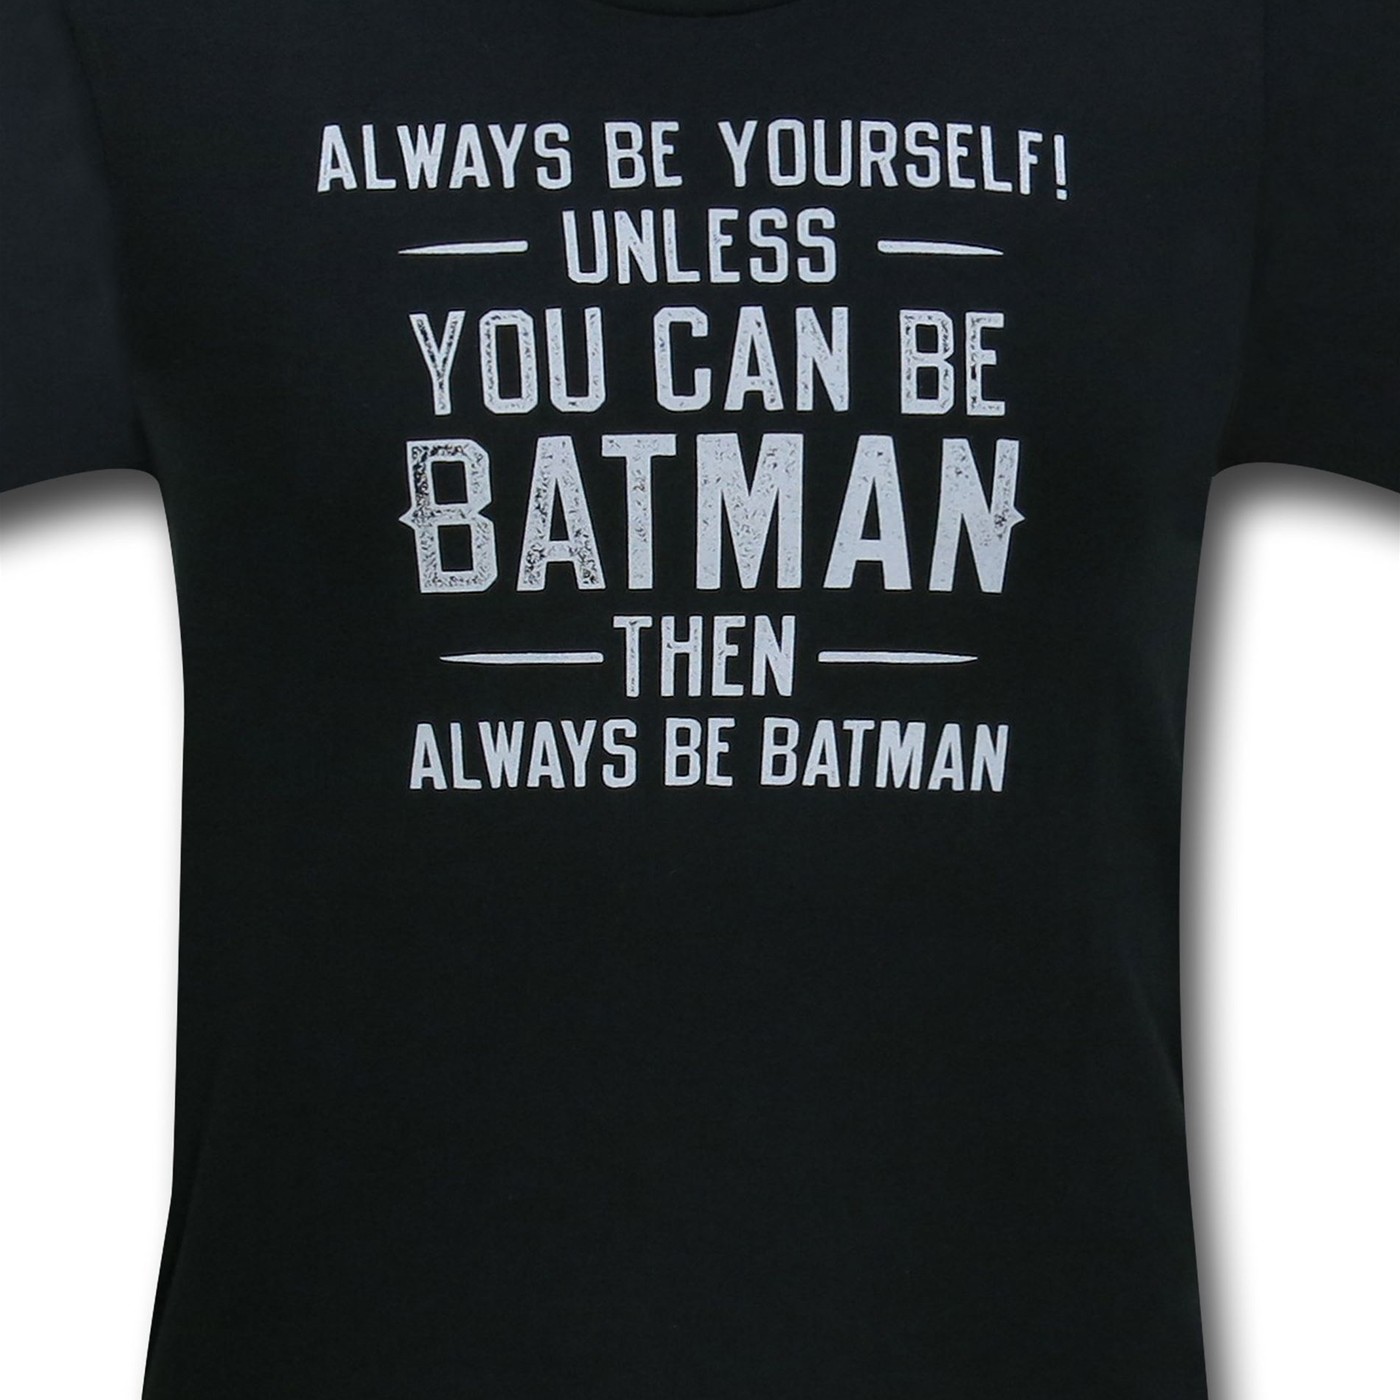 Always Be Yourself Women's T-Shirt